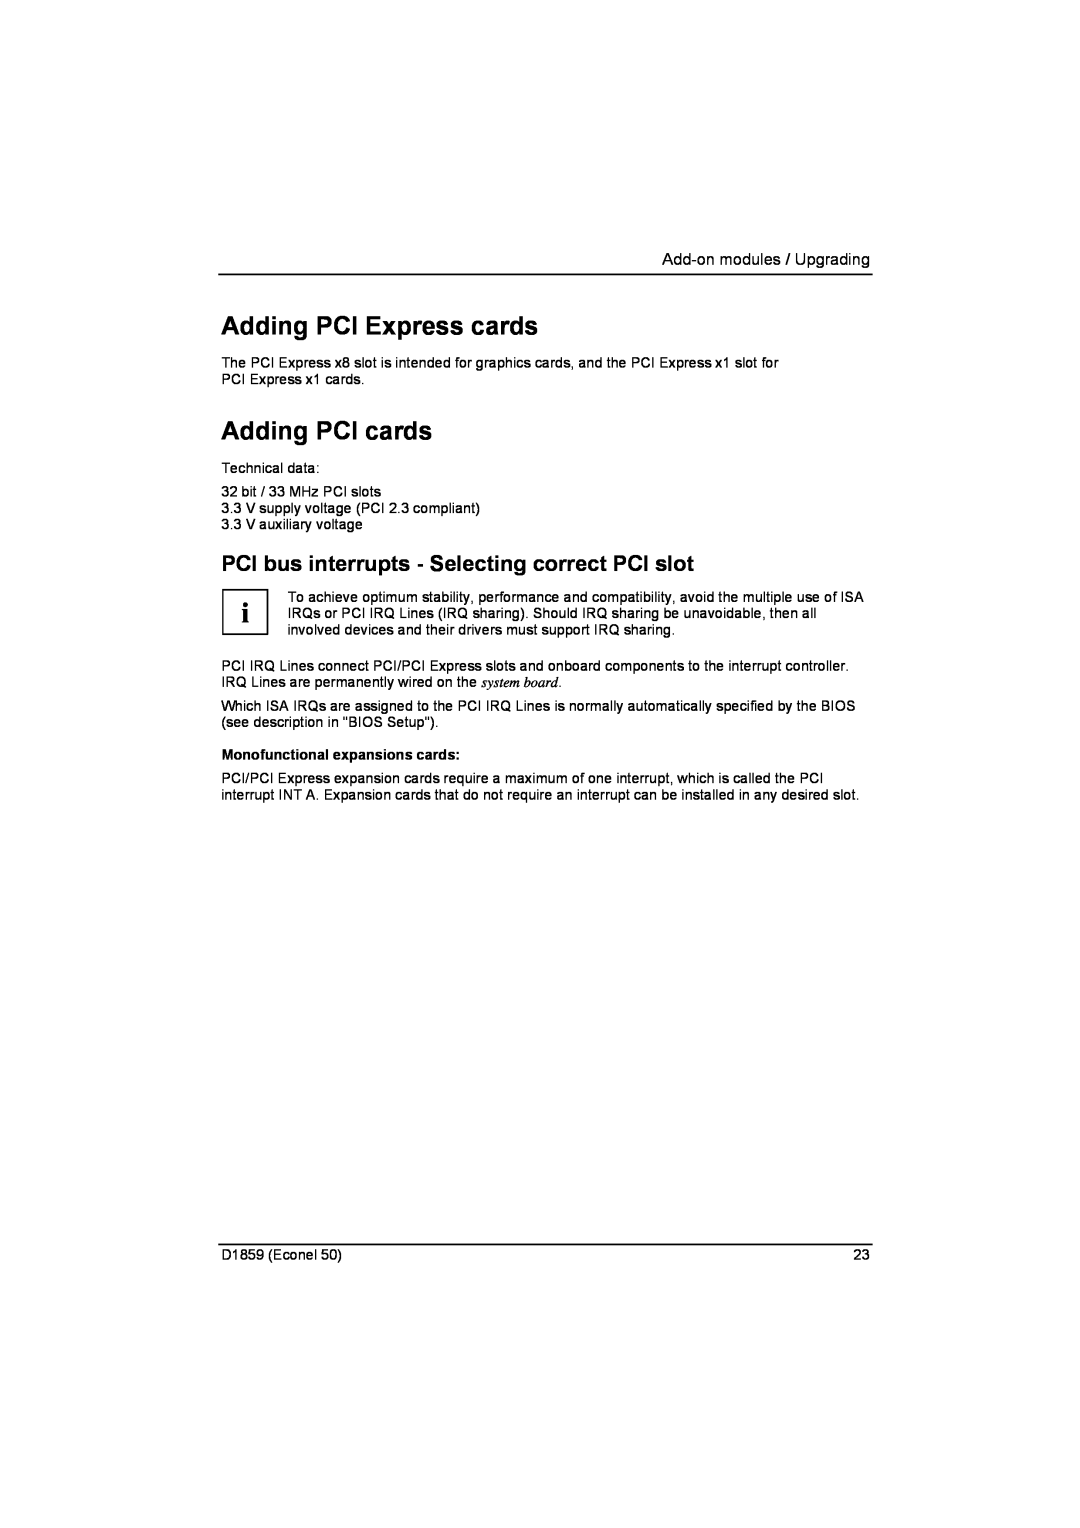 Fujitsu D1859 technical manual Adding PCI Express cards, Adding PCI cards, PCI bus interrupts - Selecting correct PCI slot 